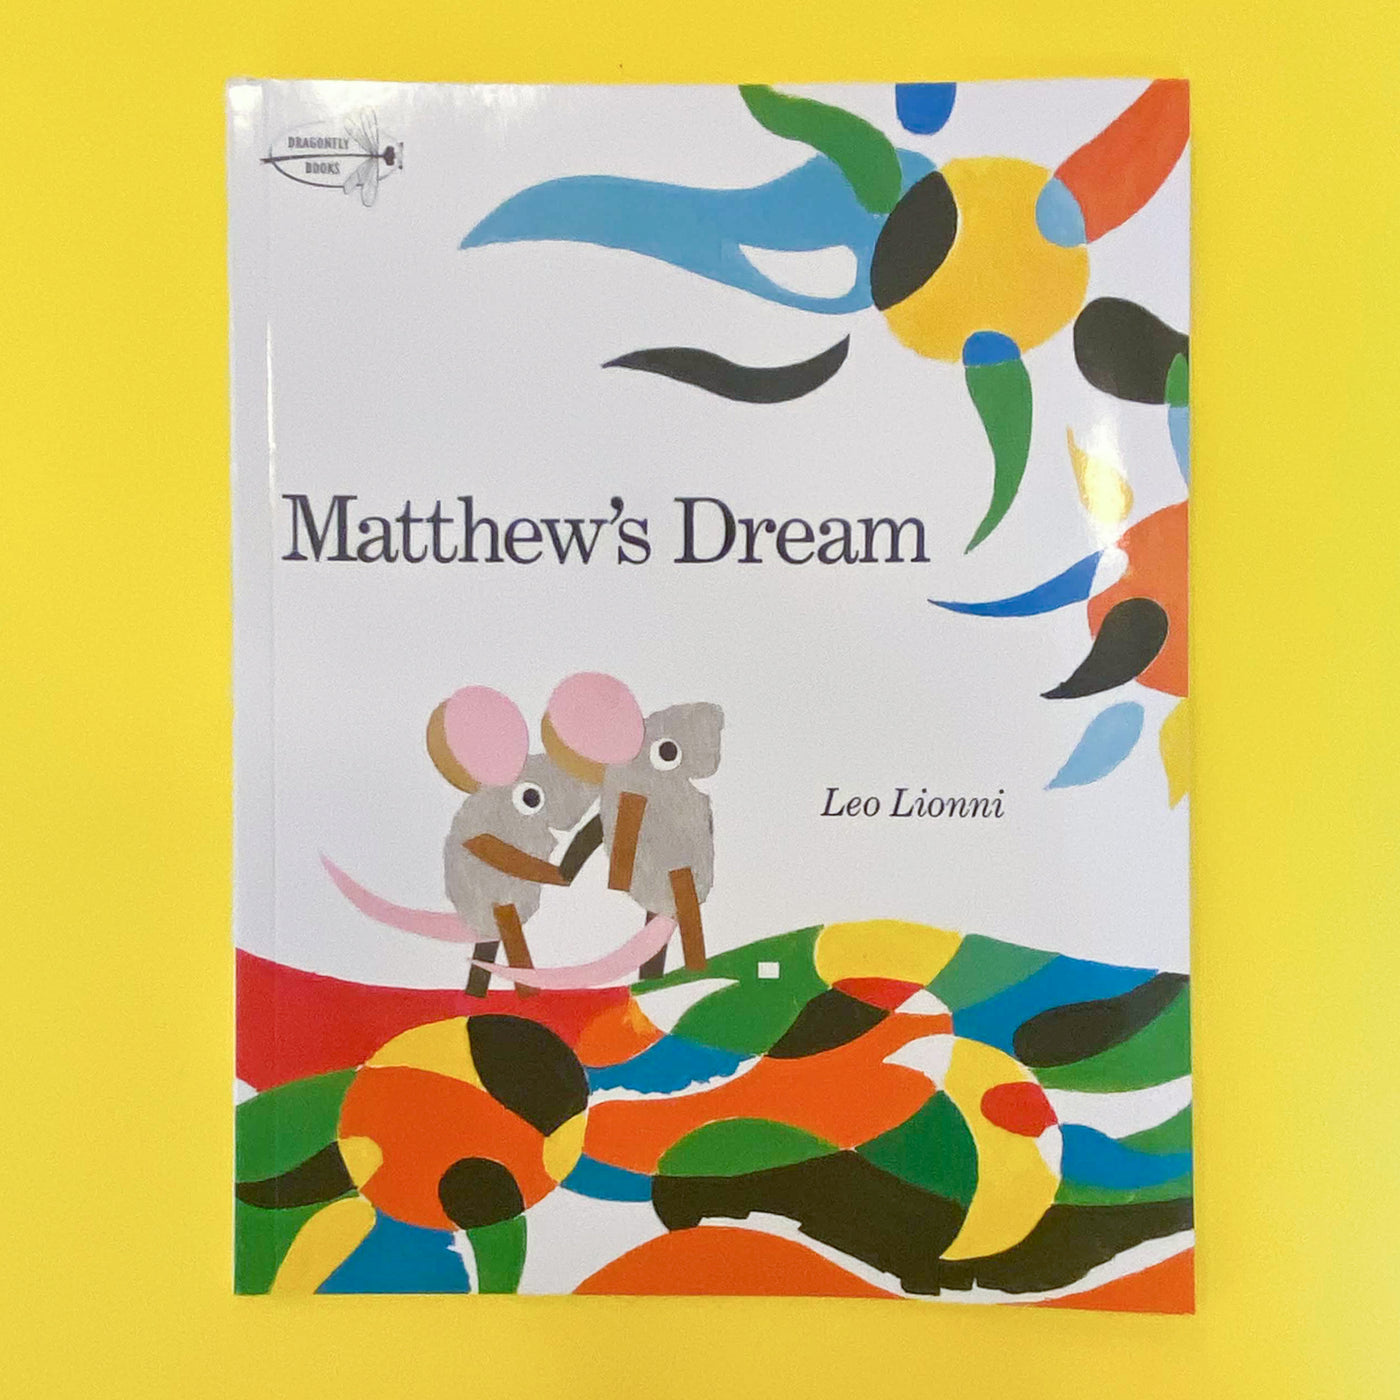 Matthew’s Dream by Leo Lionni